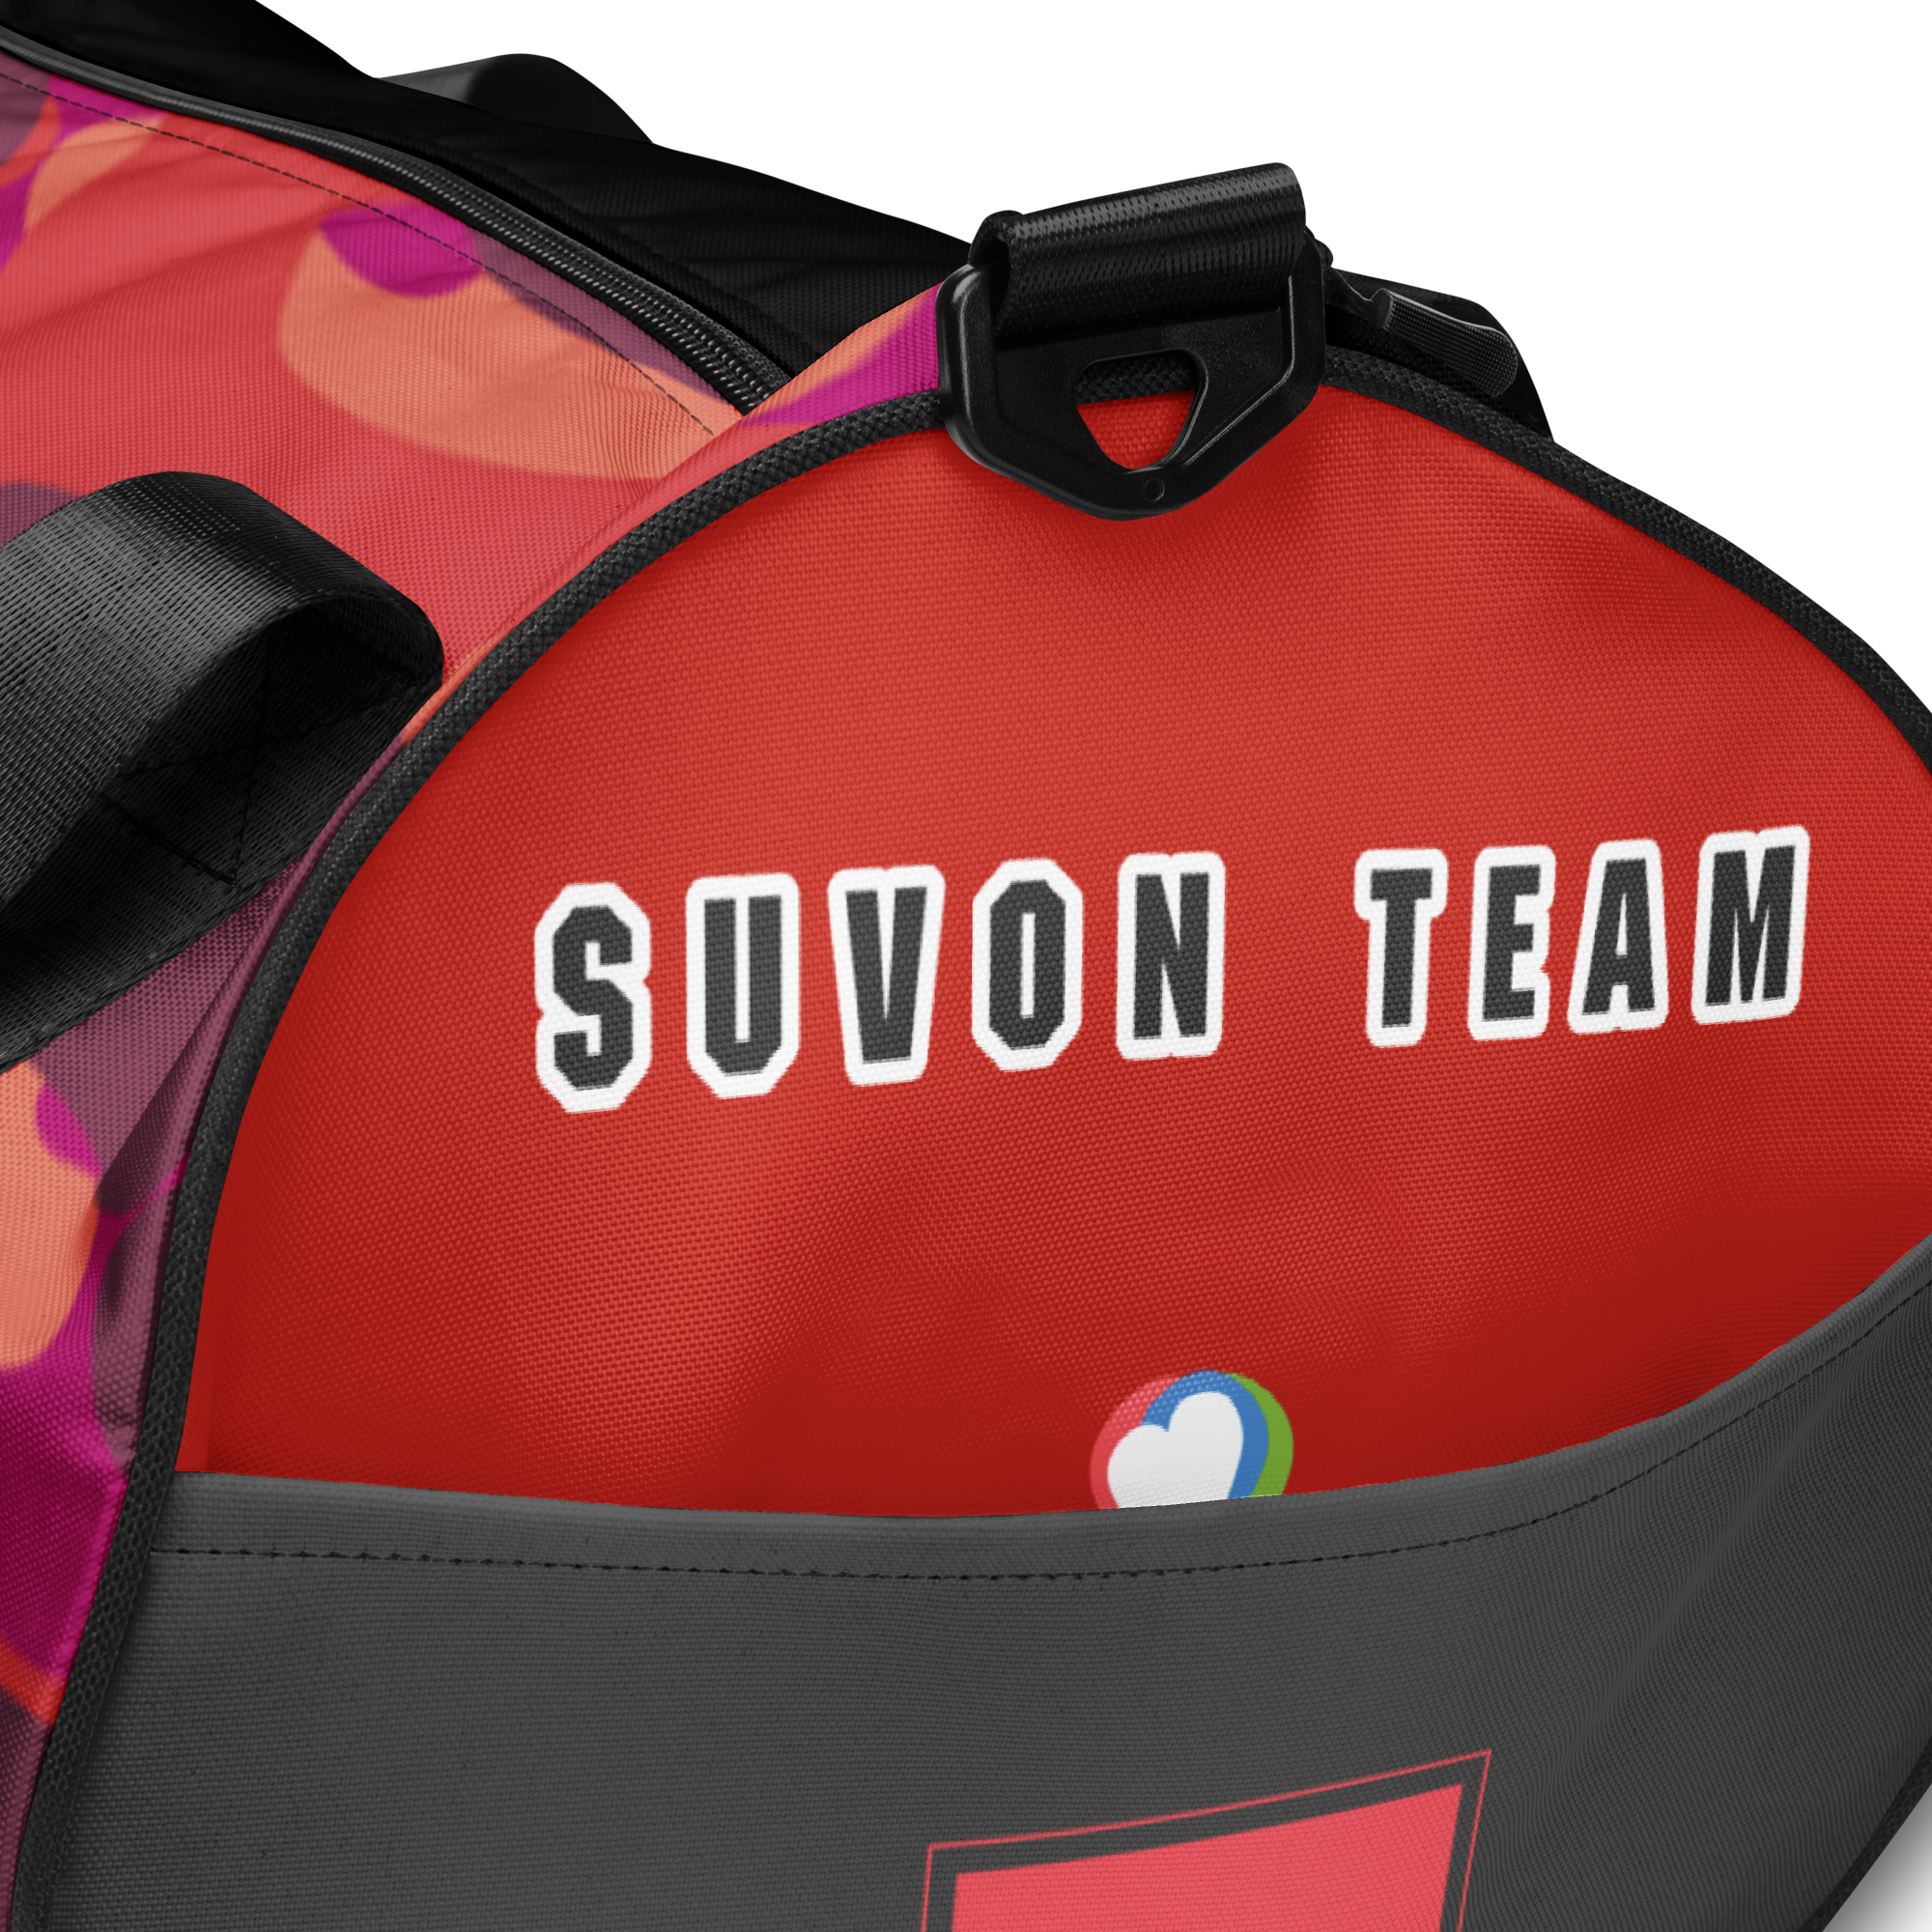 Suvon Team All-Over Print Gym Bag (Game On)